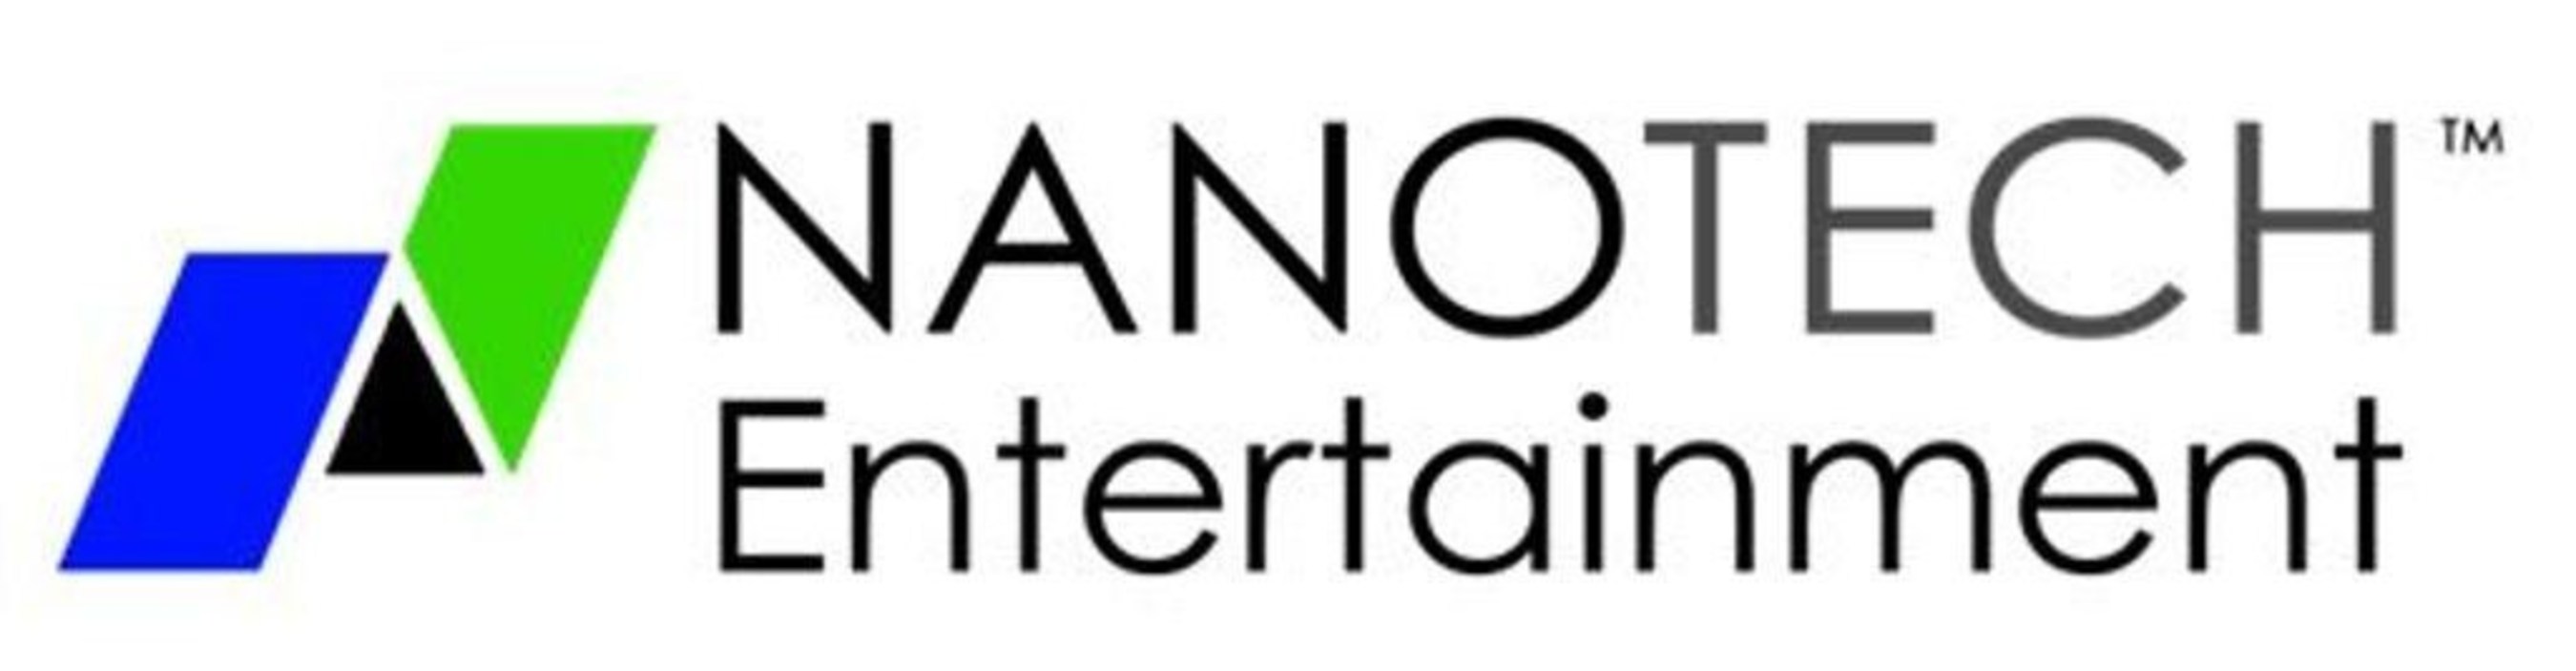 NanoTech Entertainment logo